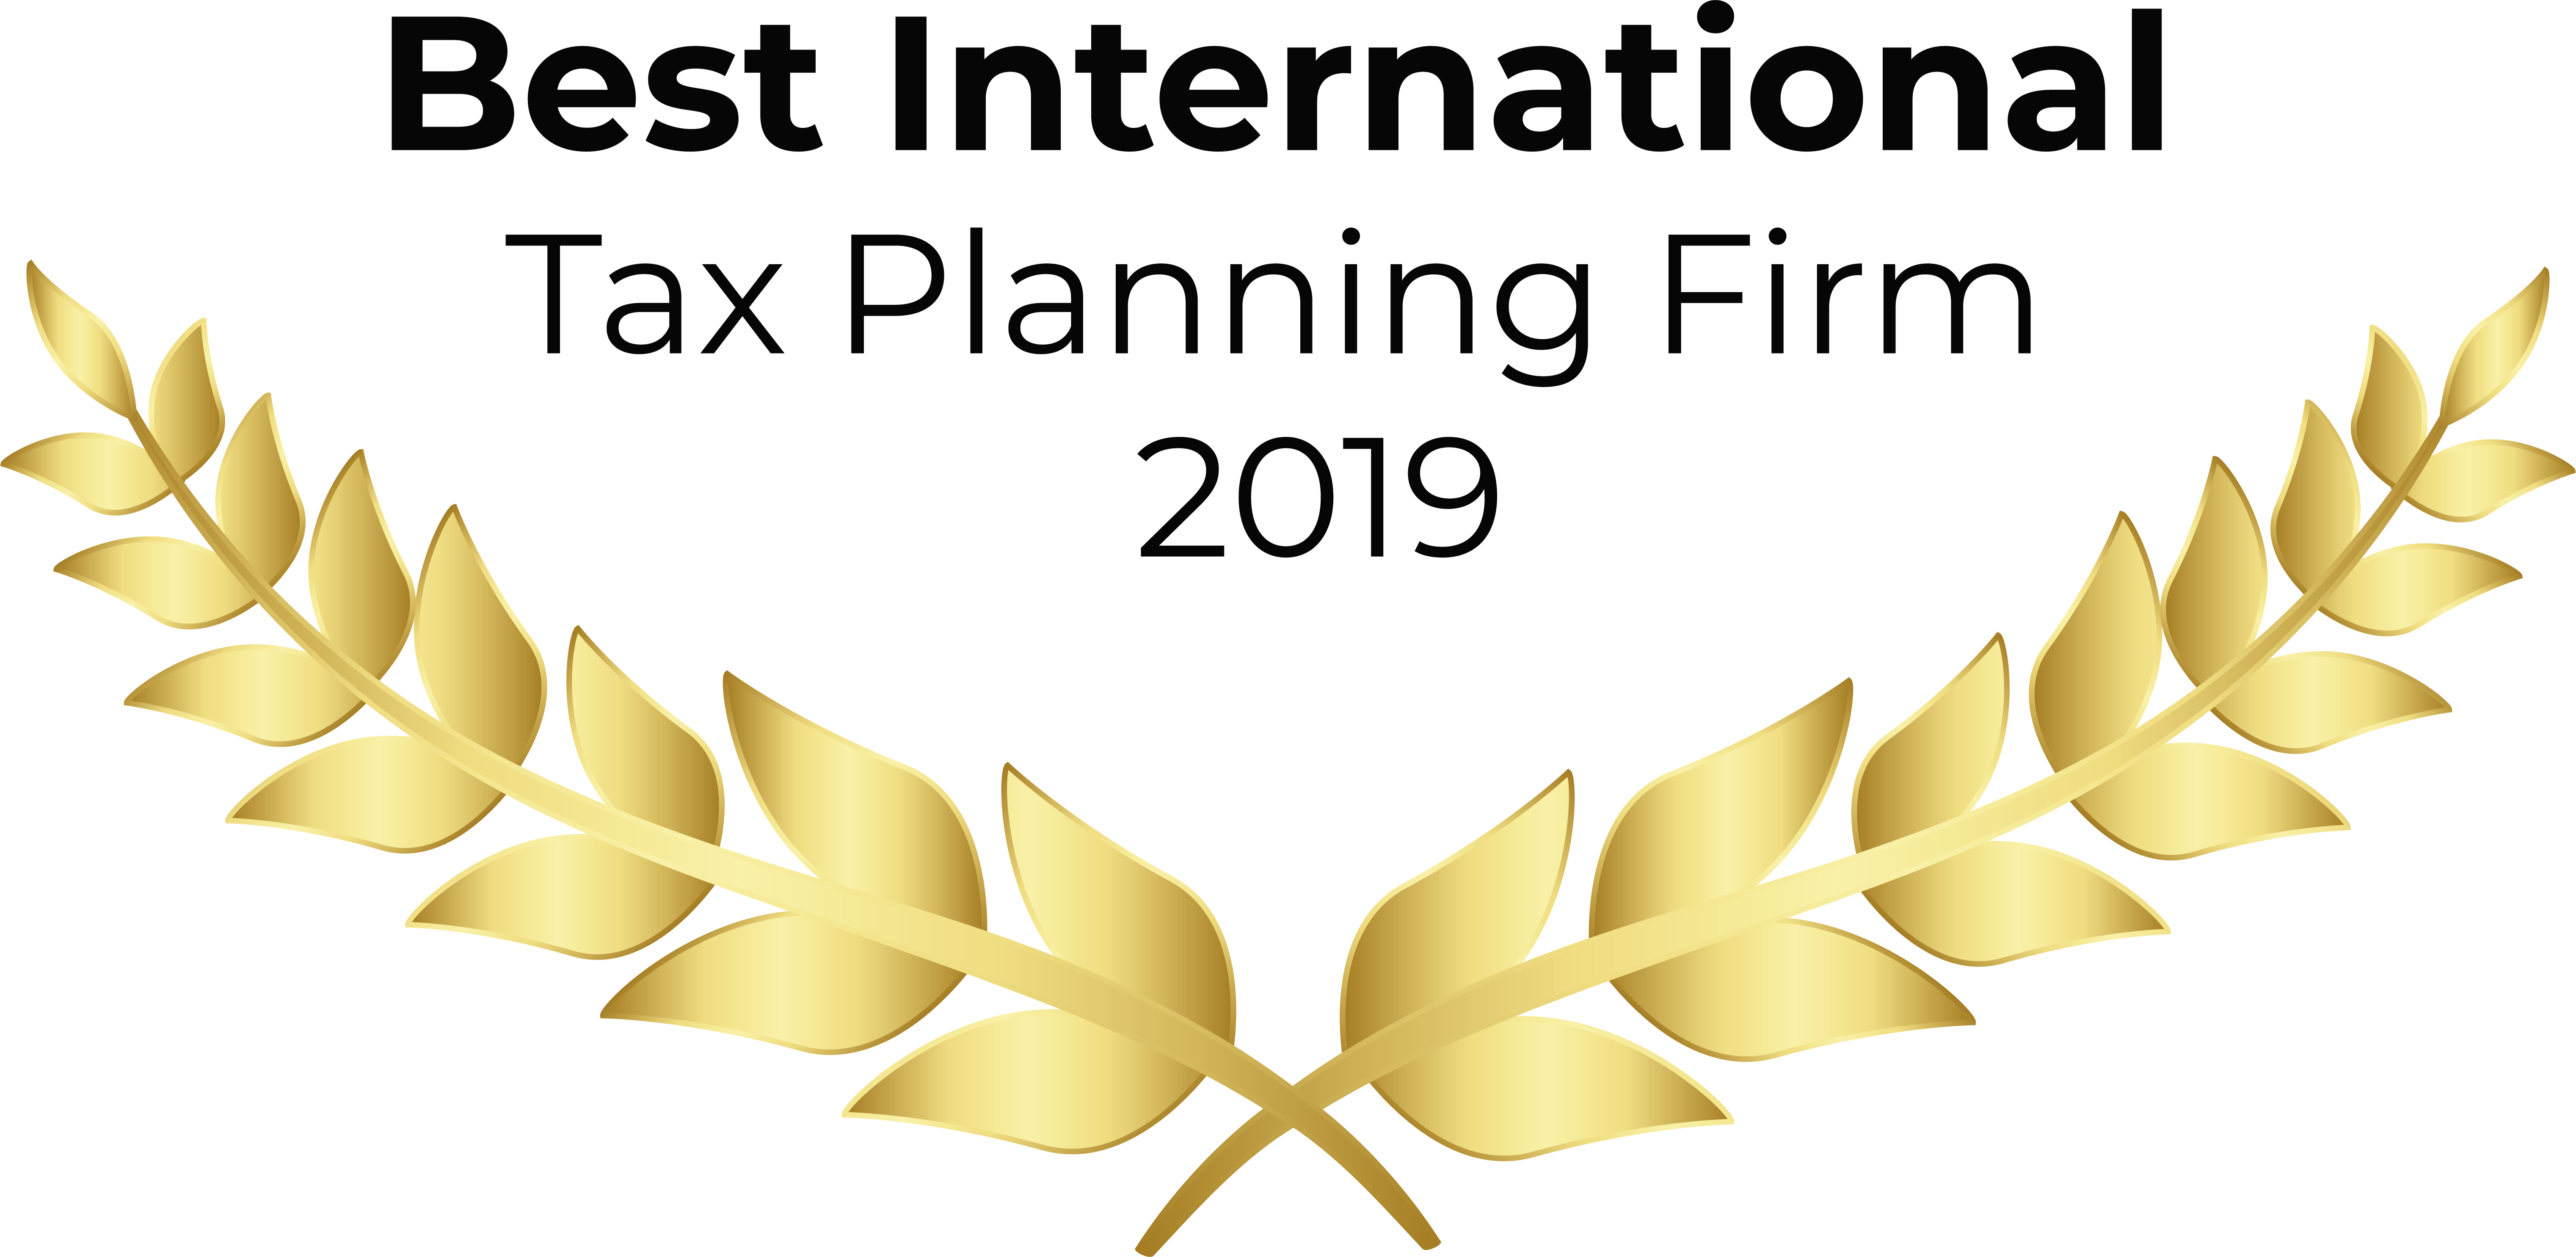 Best-International-Tax-Planning-Firm2019